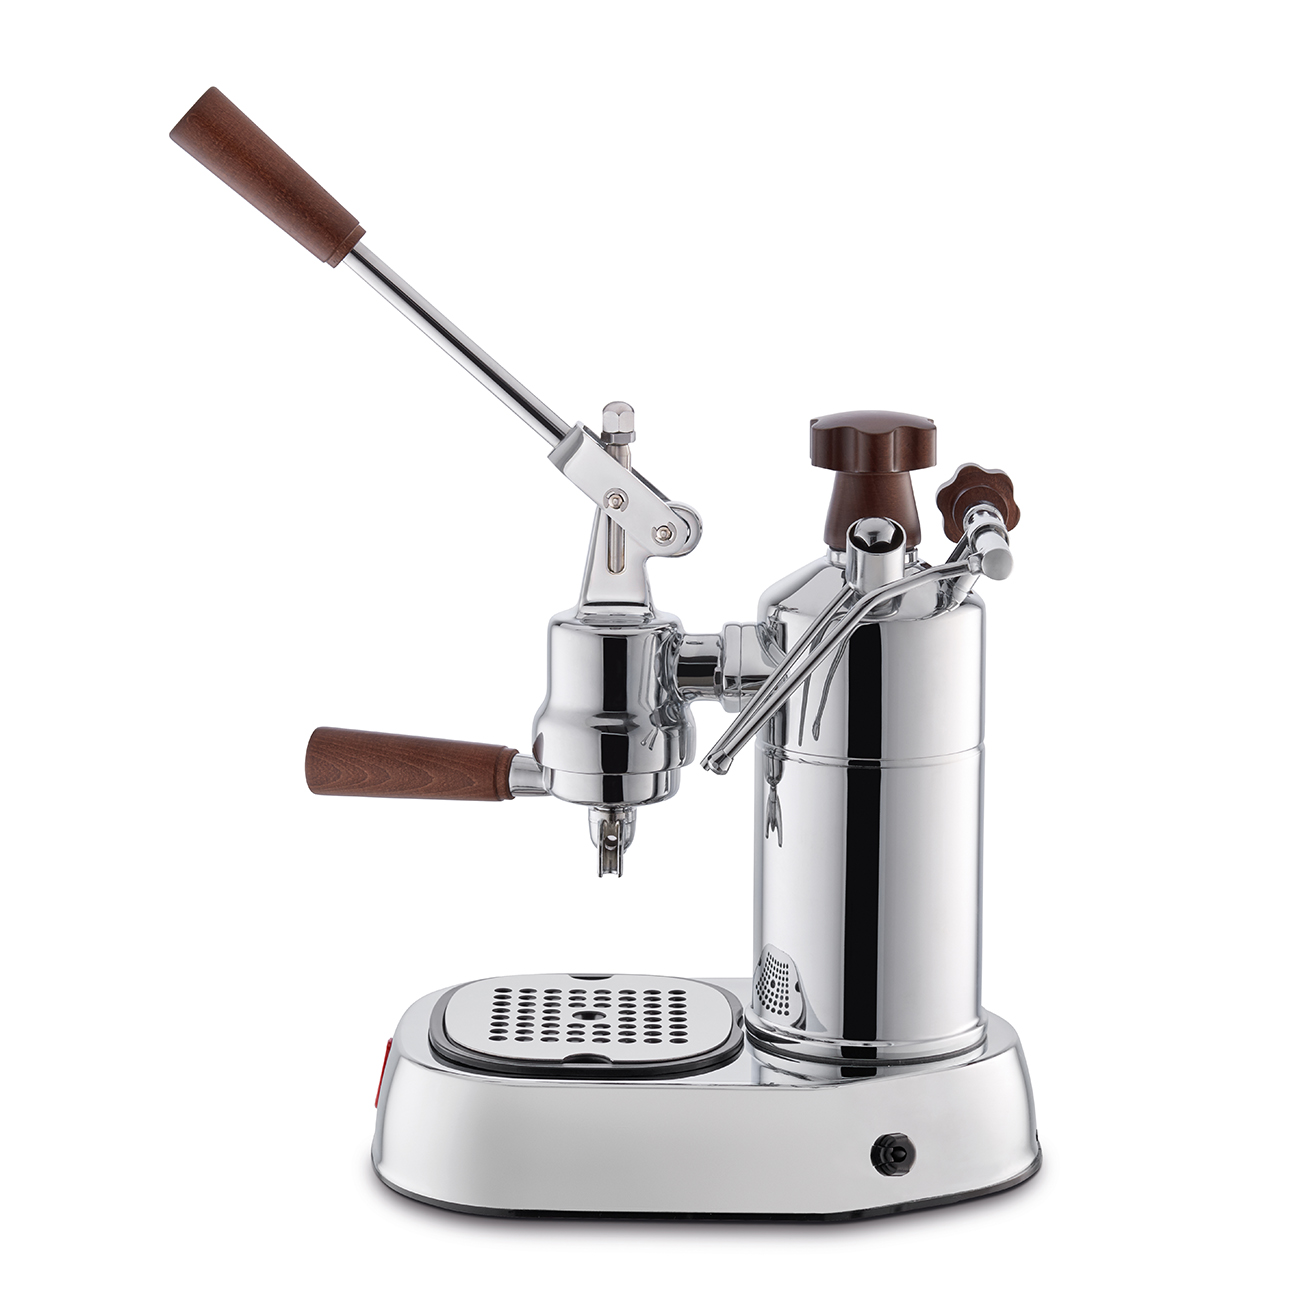 La Pavoni Professional Lusso espresso machine with wooden handles